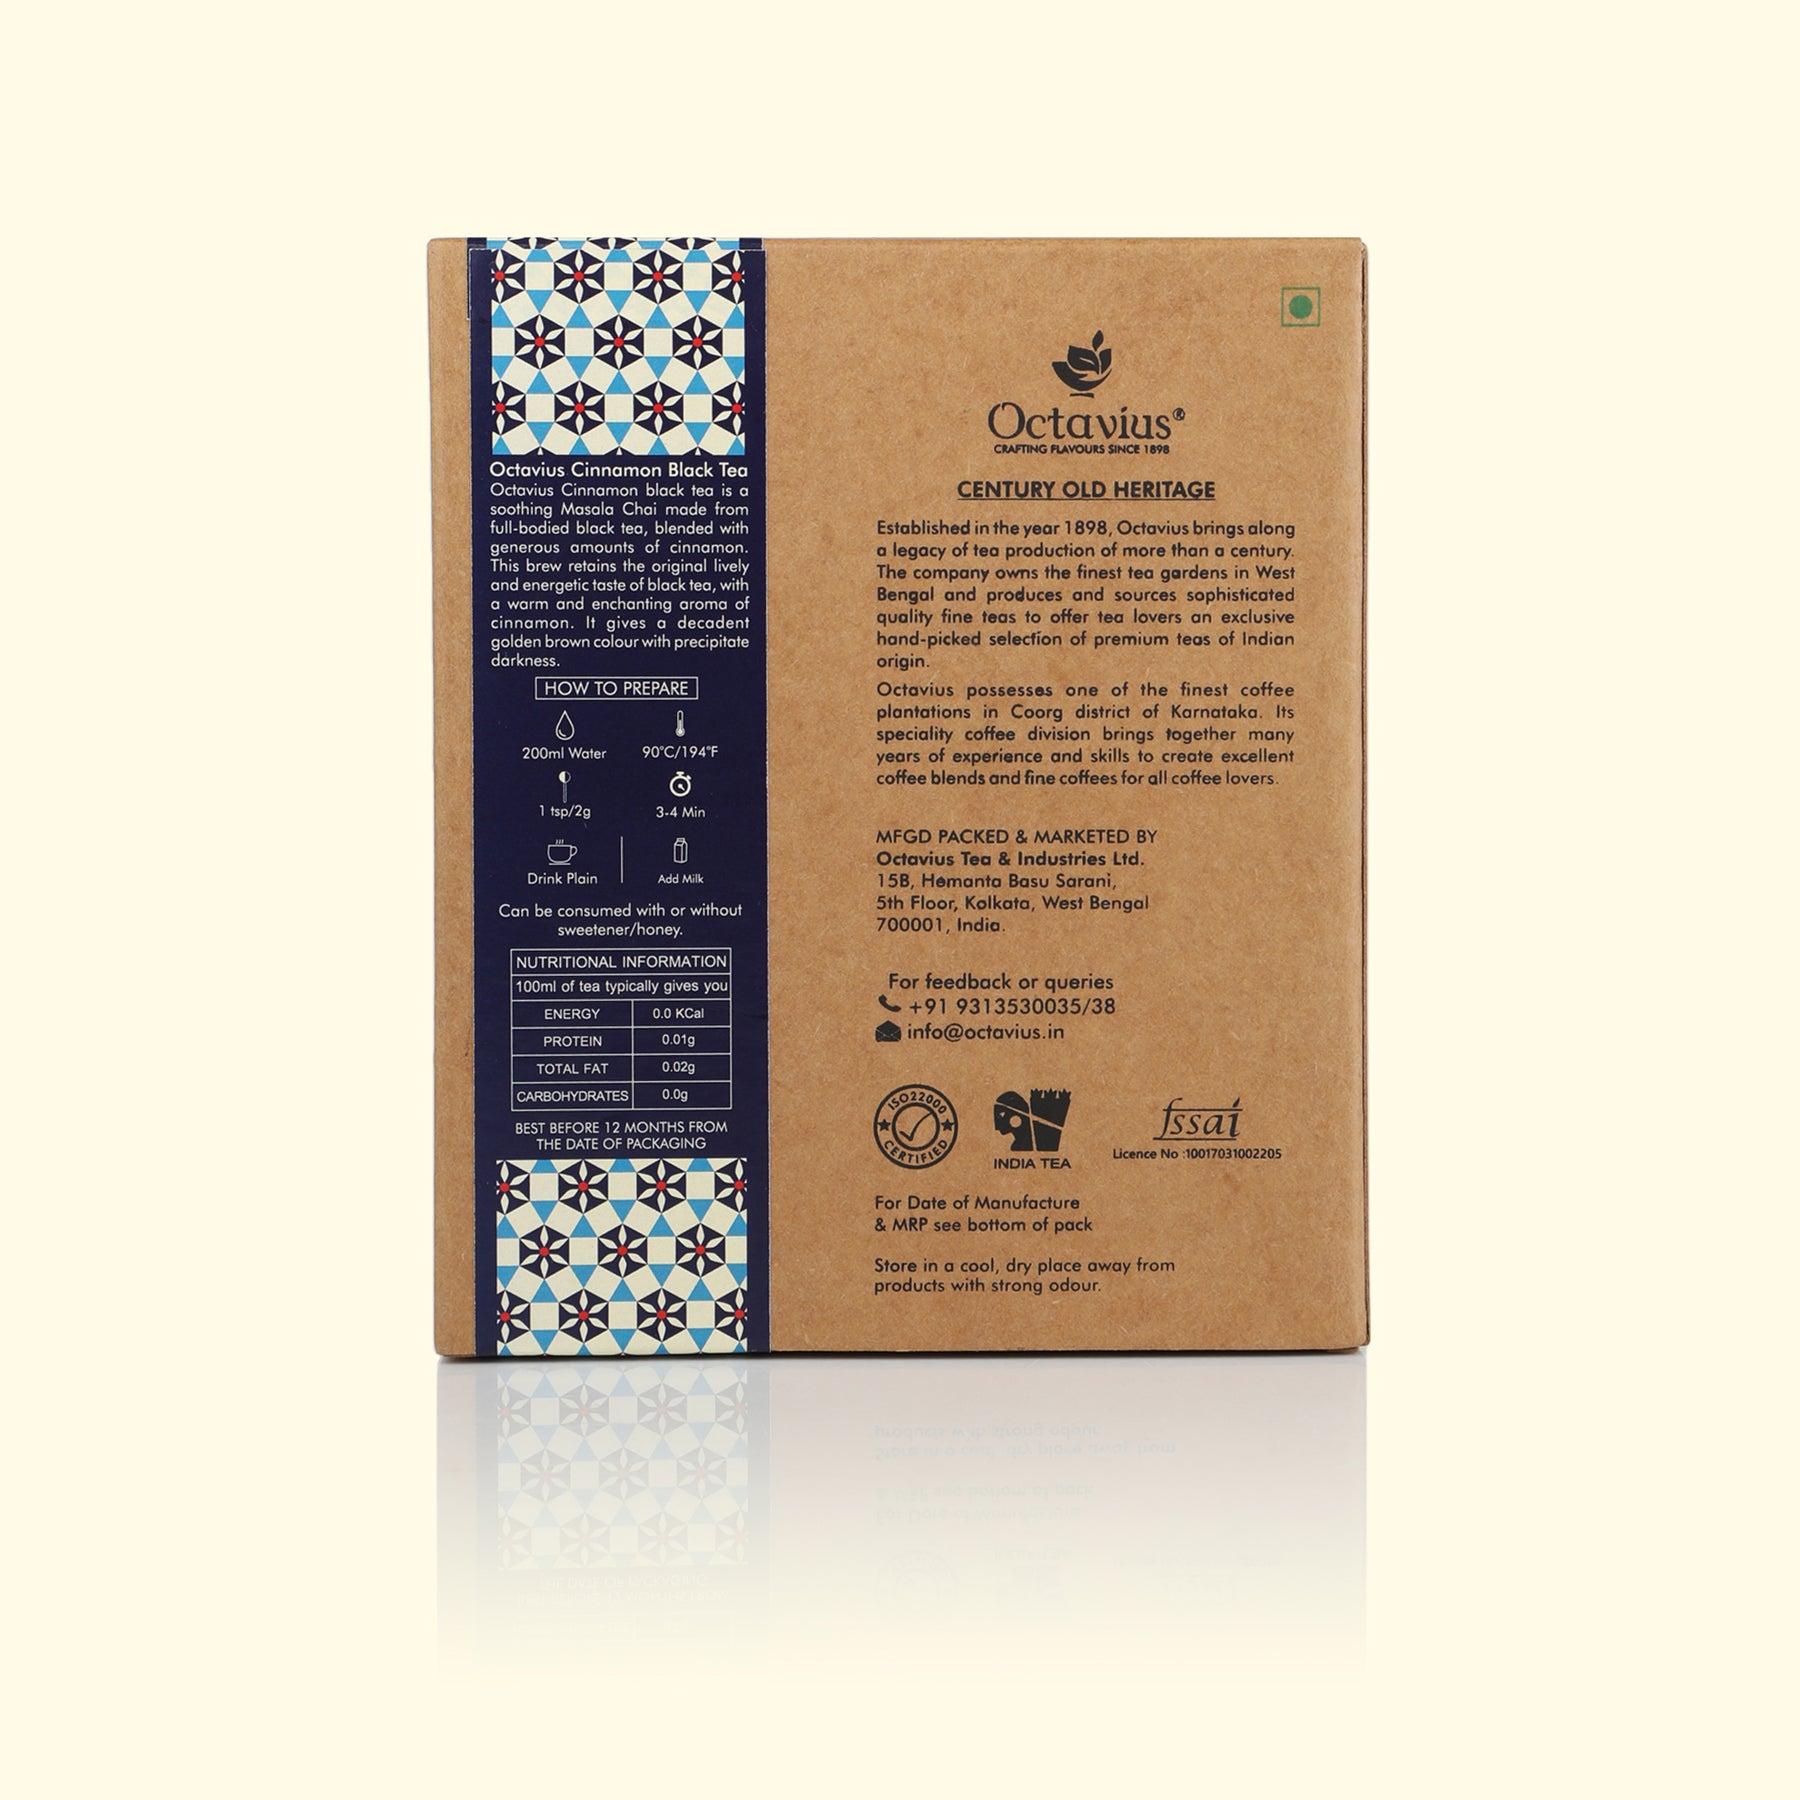 Cinnamon Black Tea Loose Leaf in Kraft Box - 100 Gms